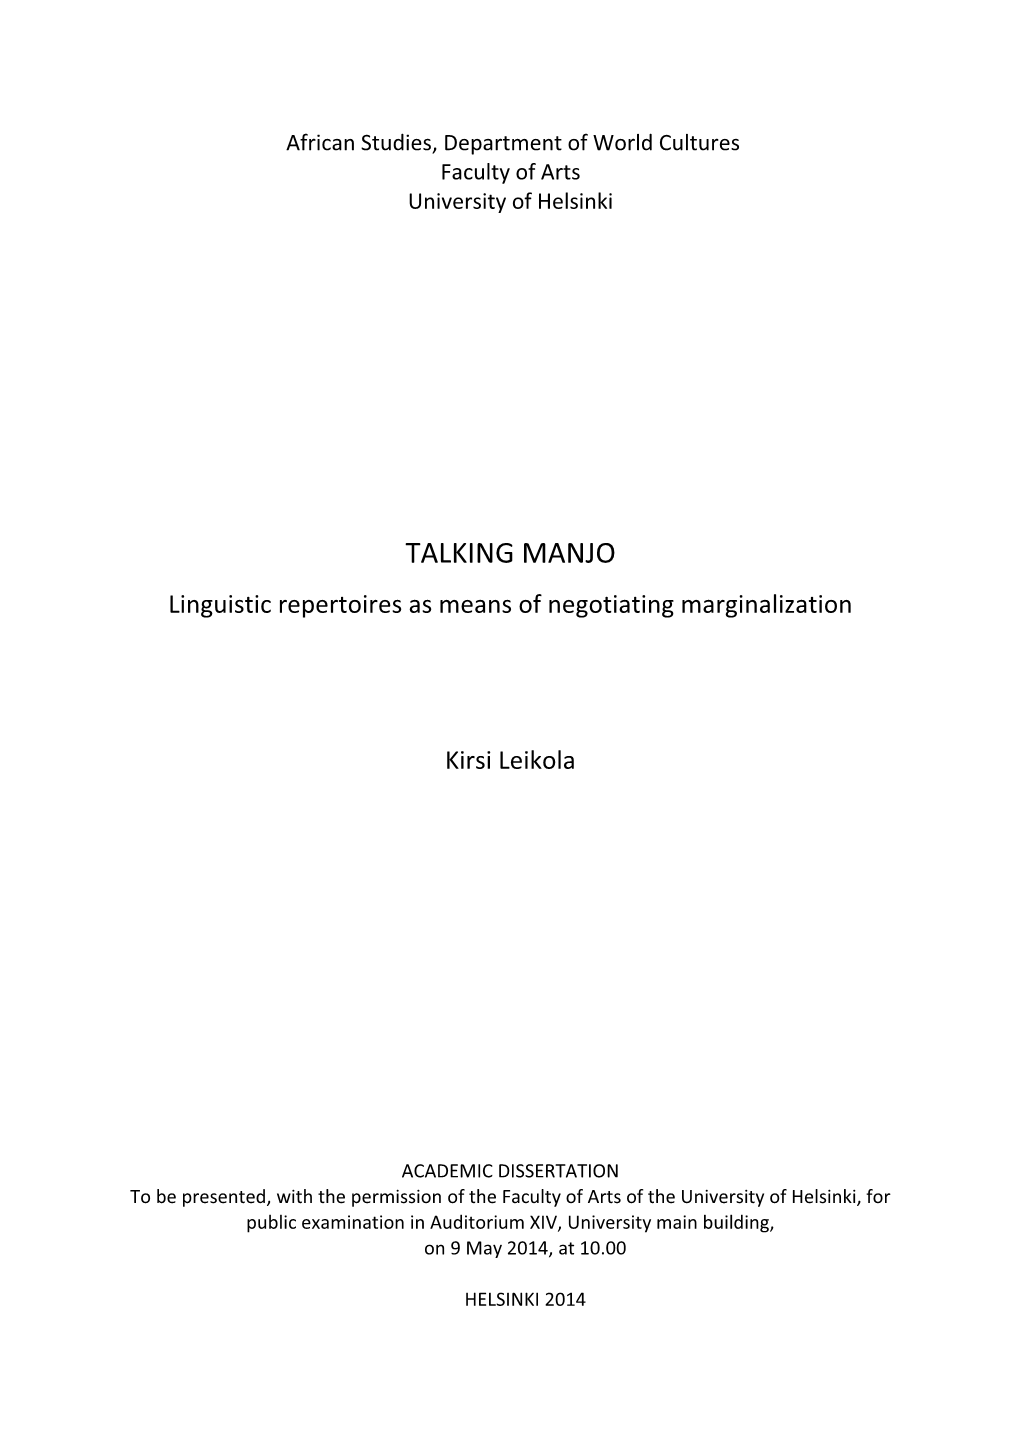 TALKING MANJO Linguistic Repertoires As Means of Negotiating Marginalization